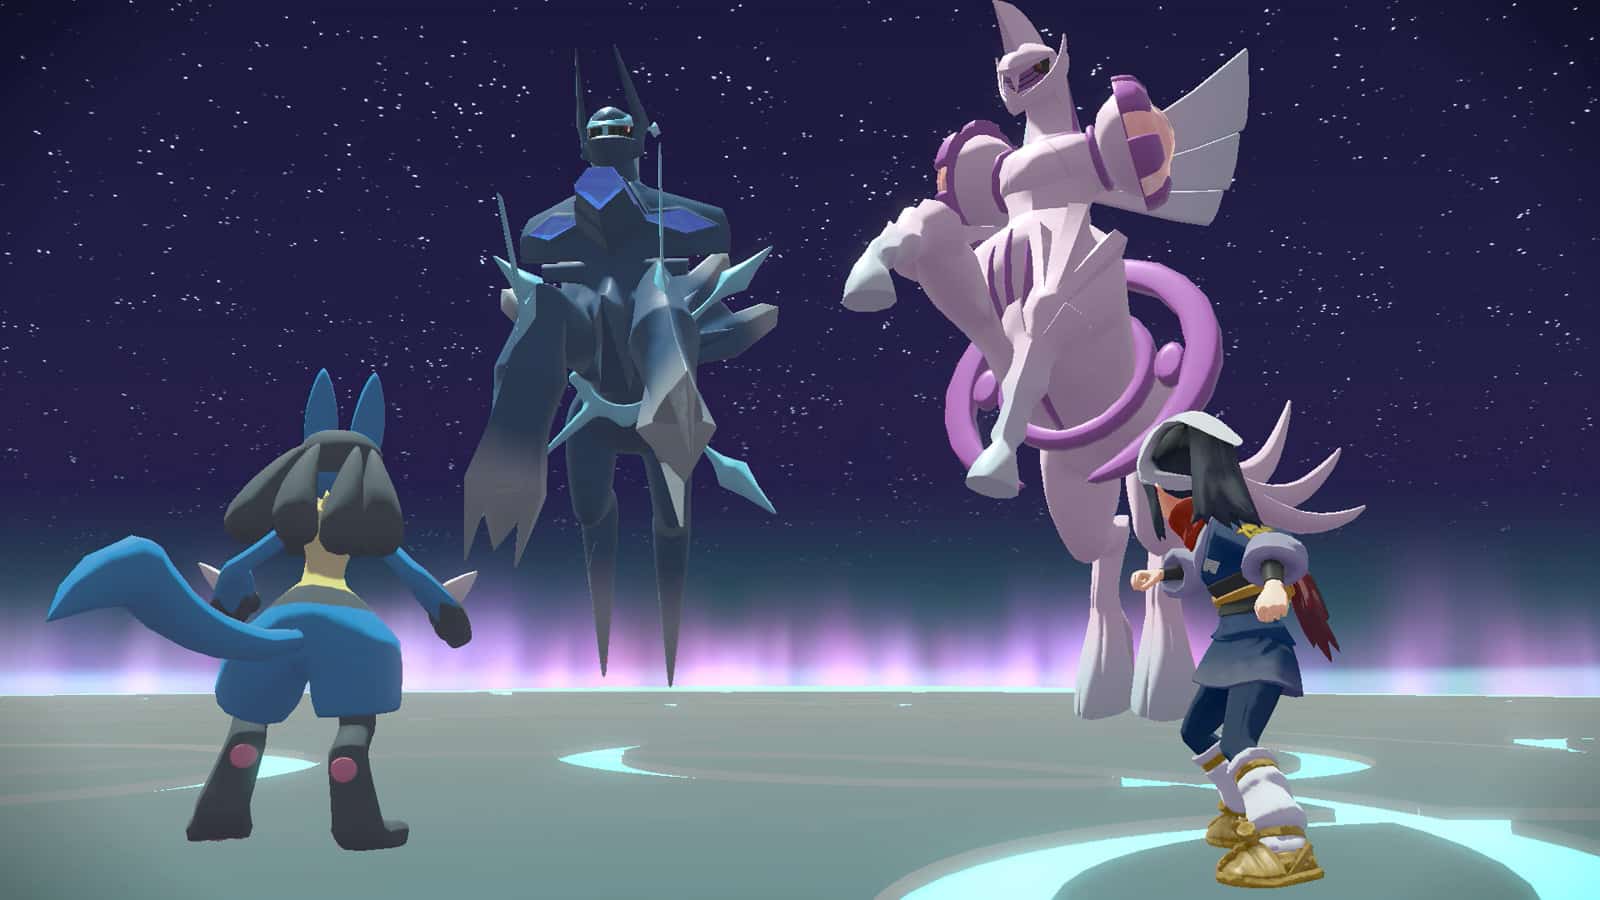 Anubis on X: Pokémon Legends: Arceus v 1.1.0 (Daybreak